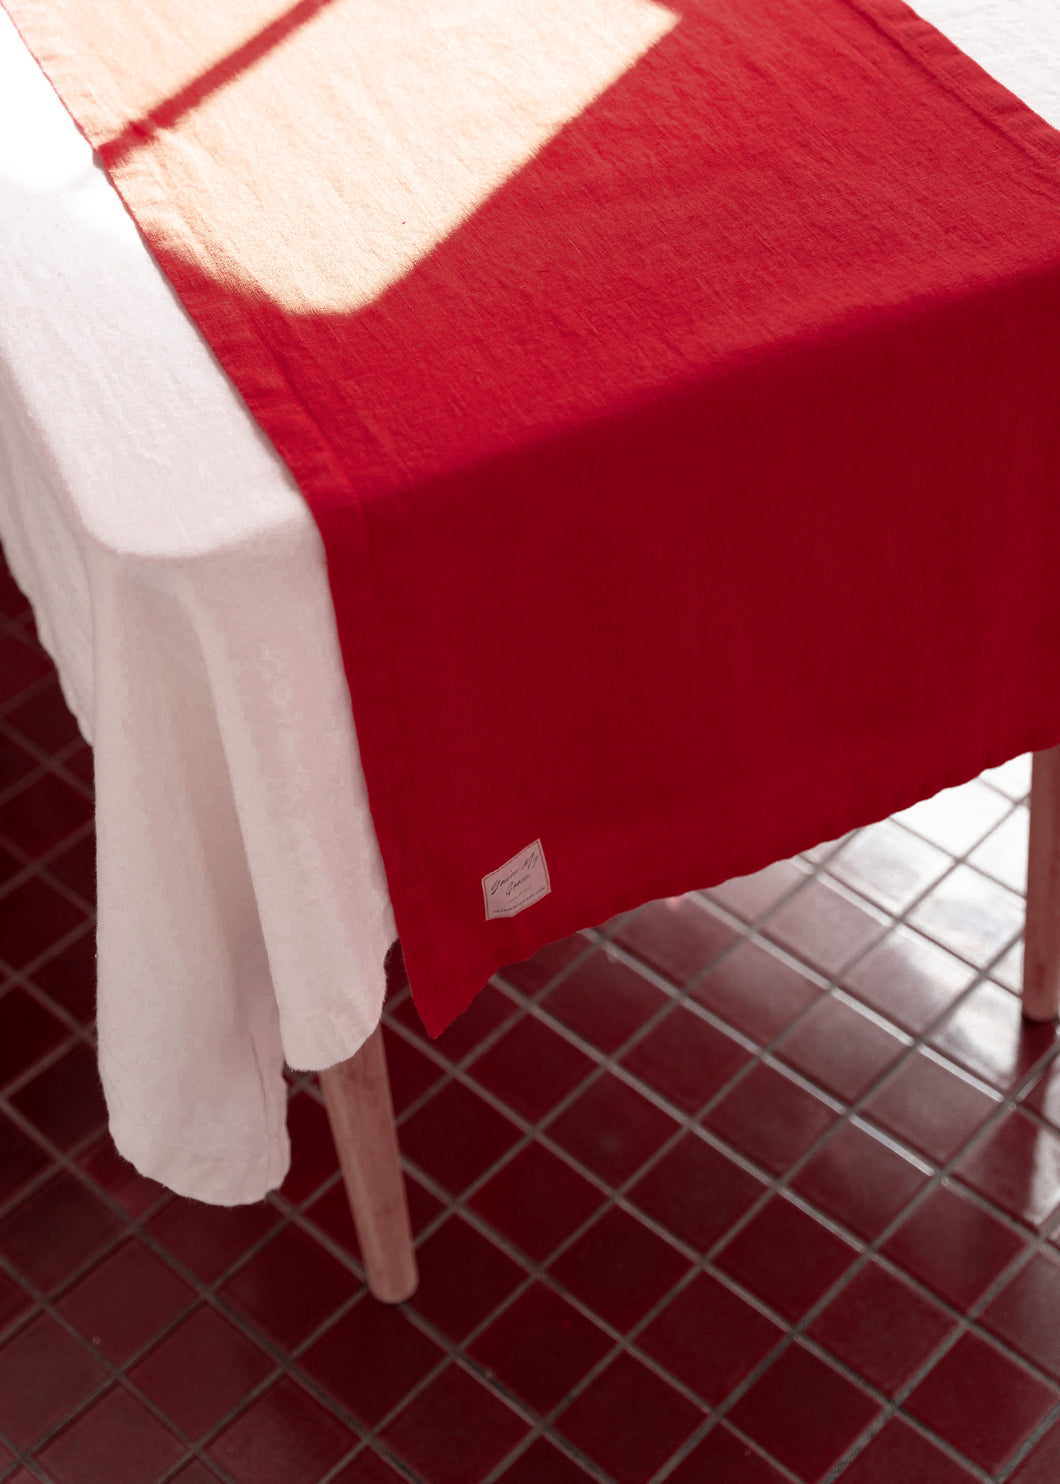 100% Linen Table Runner in Christmas Red Large